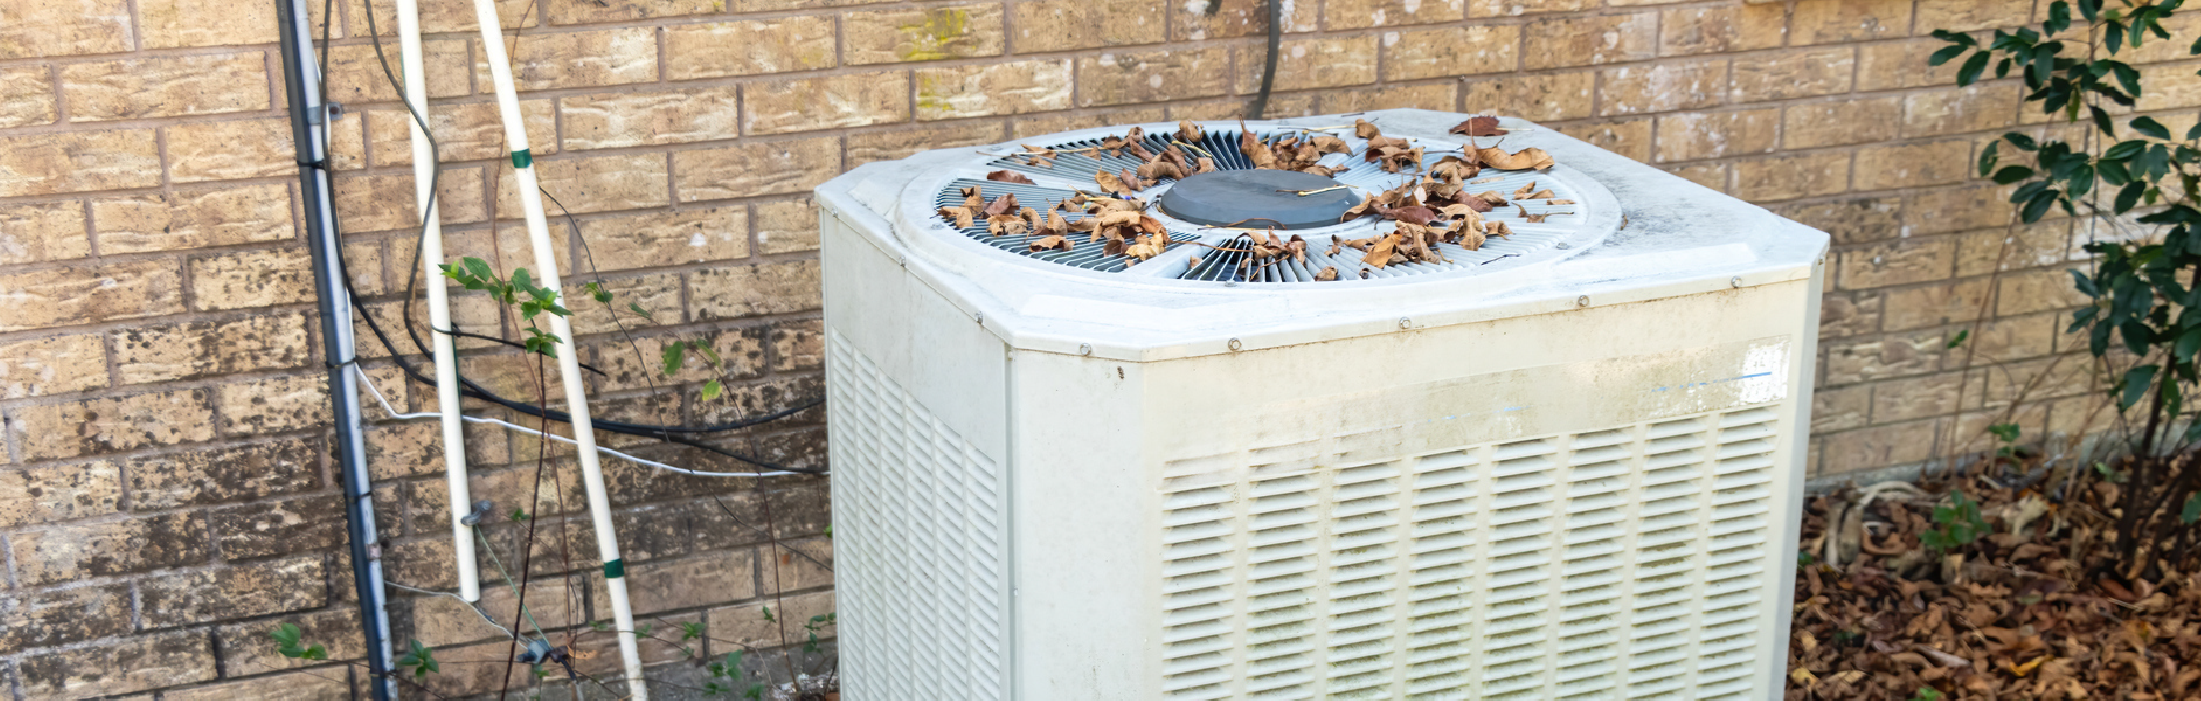 Outdoor HVAC condenser unit